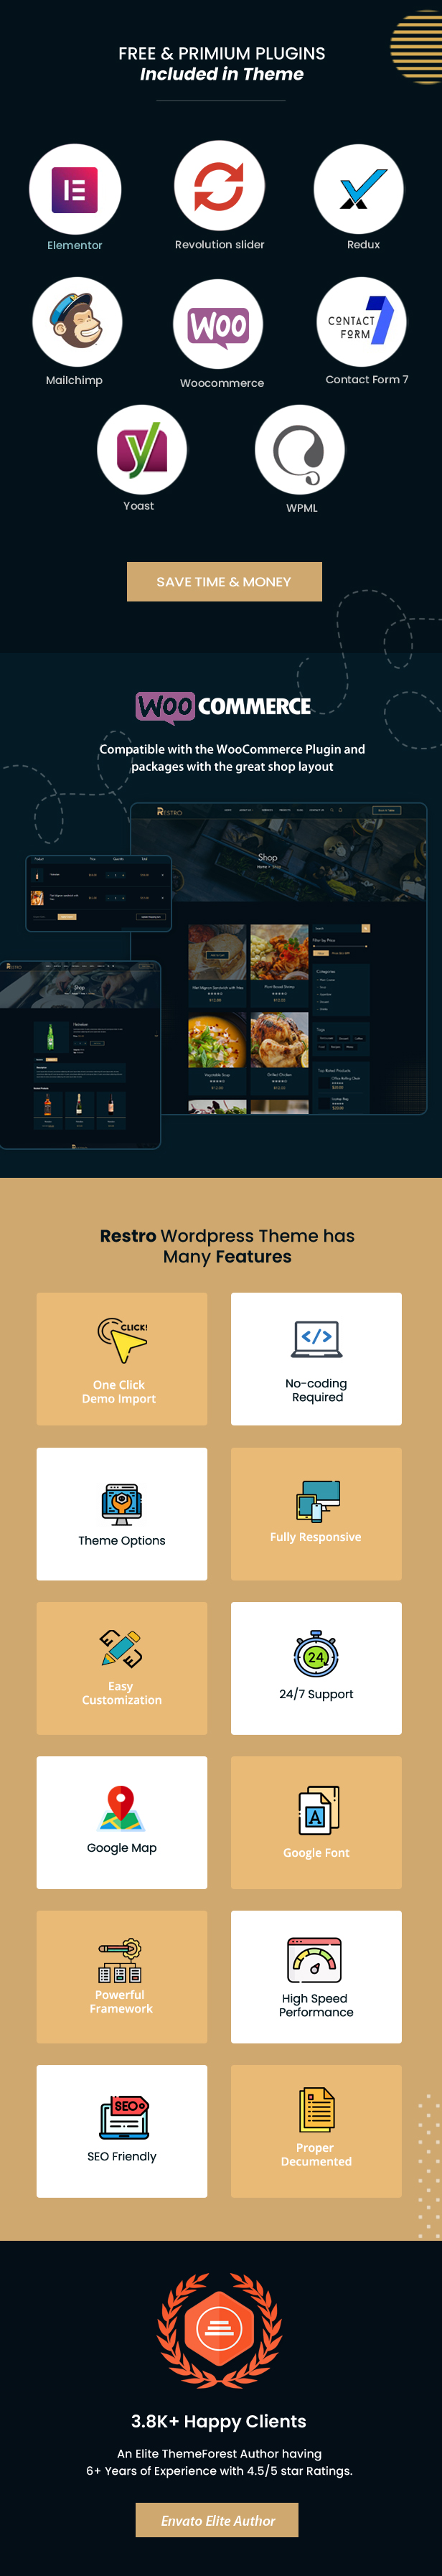 Restro - Restaurant & Bar WordPress Theme - 6